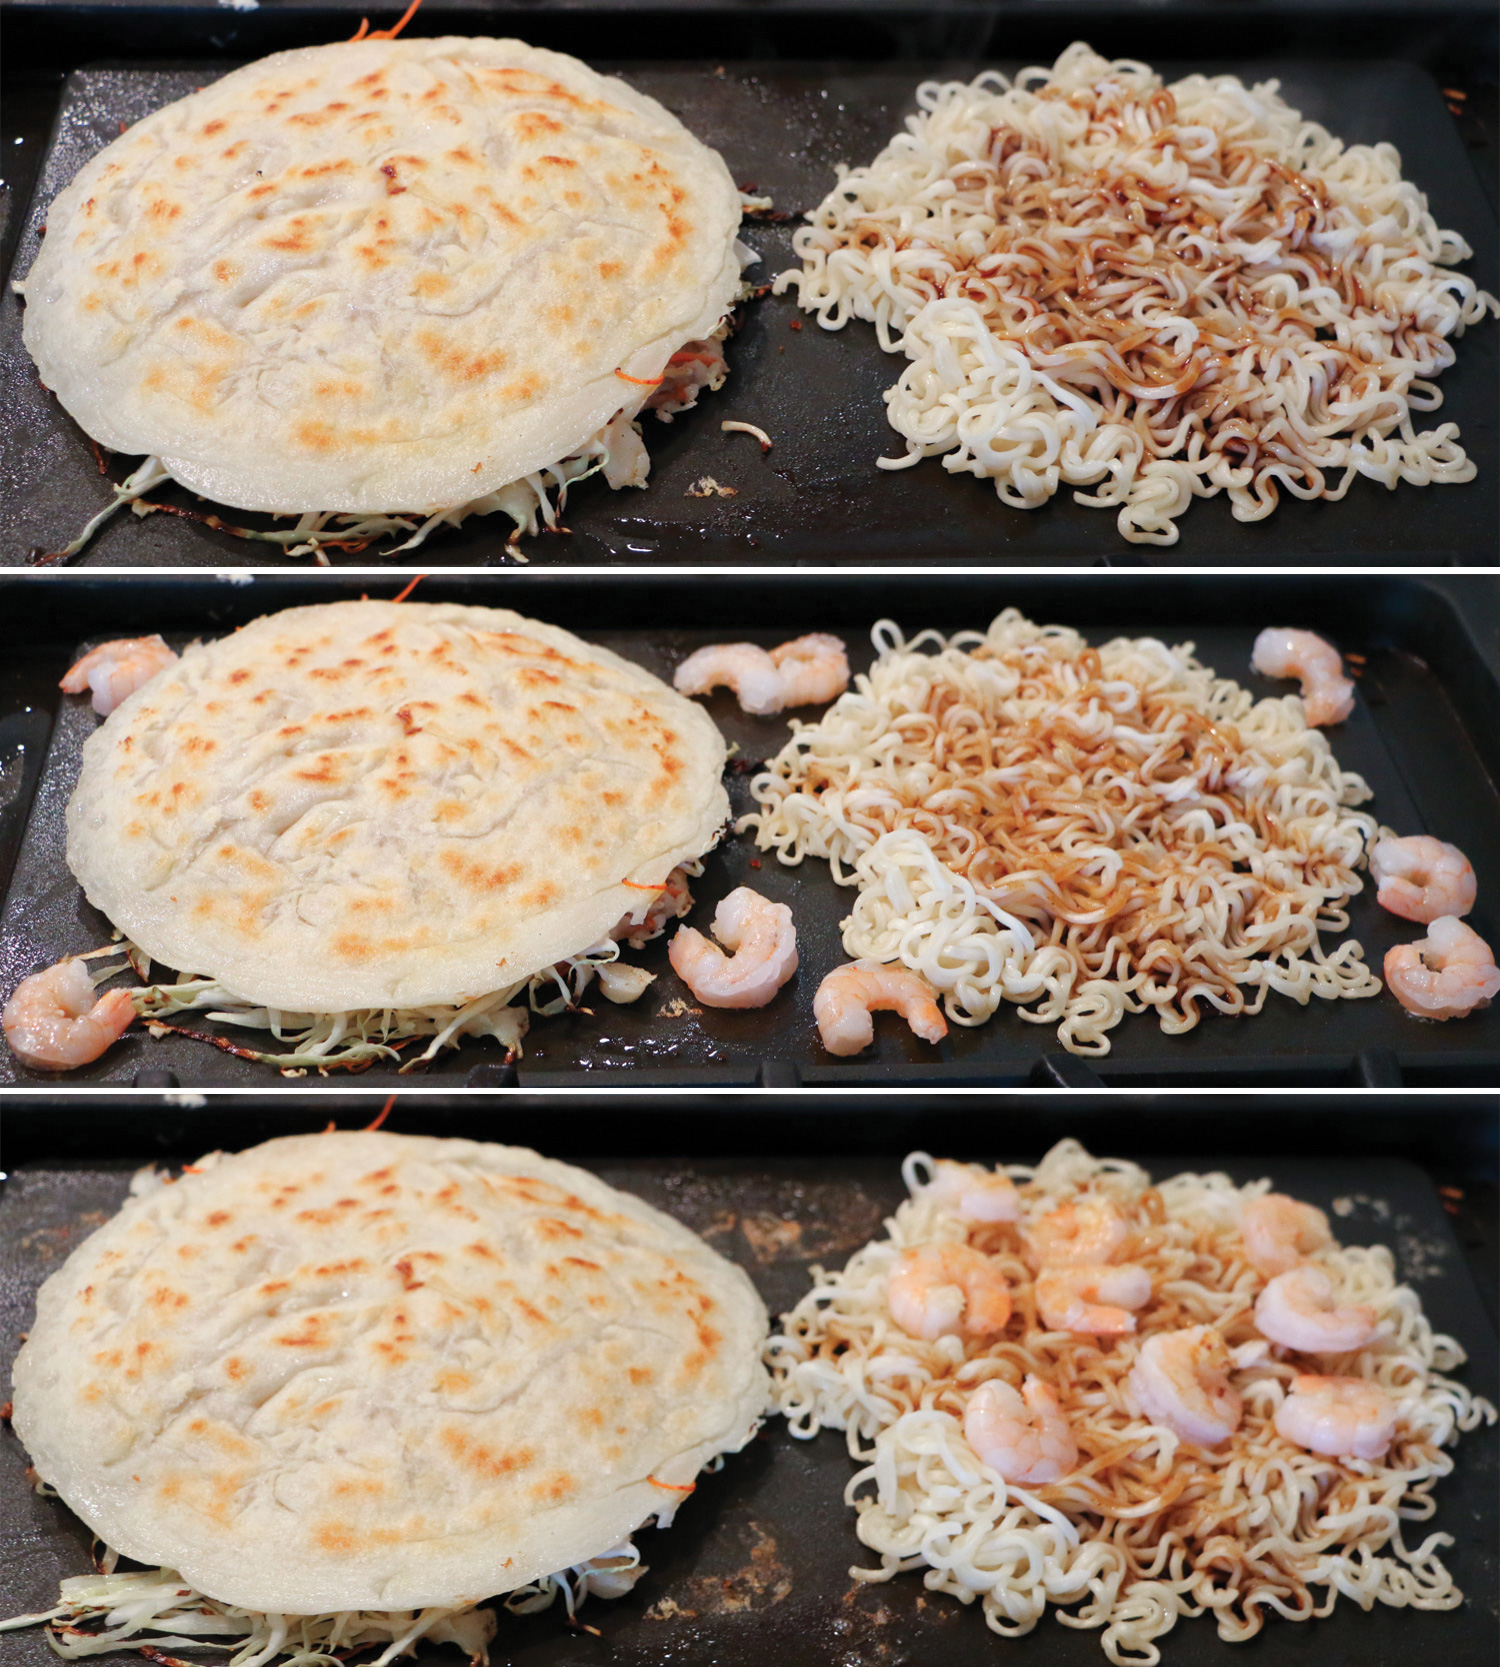 Steps to Make Hiroshima Style Okonomiyaki on a Griddle